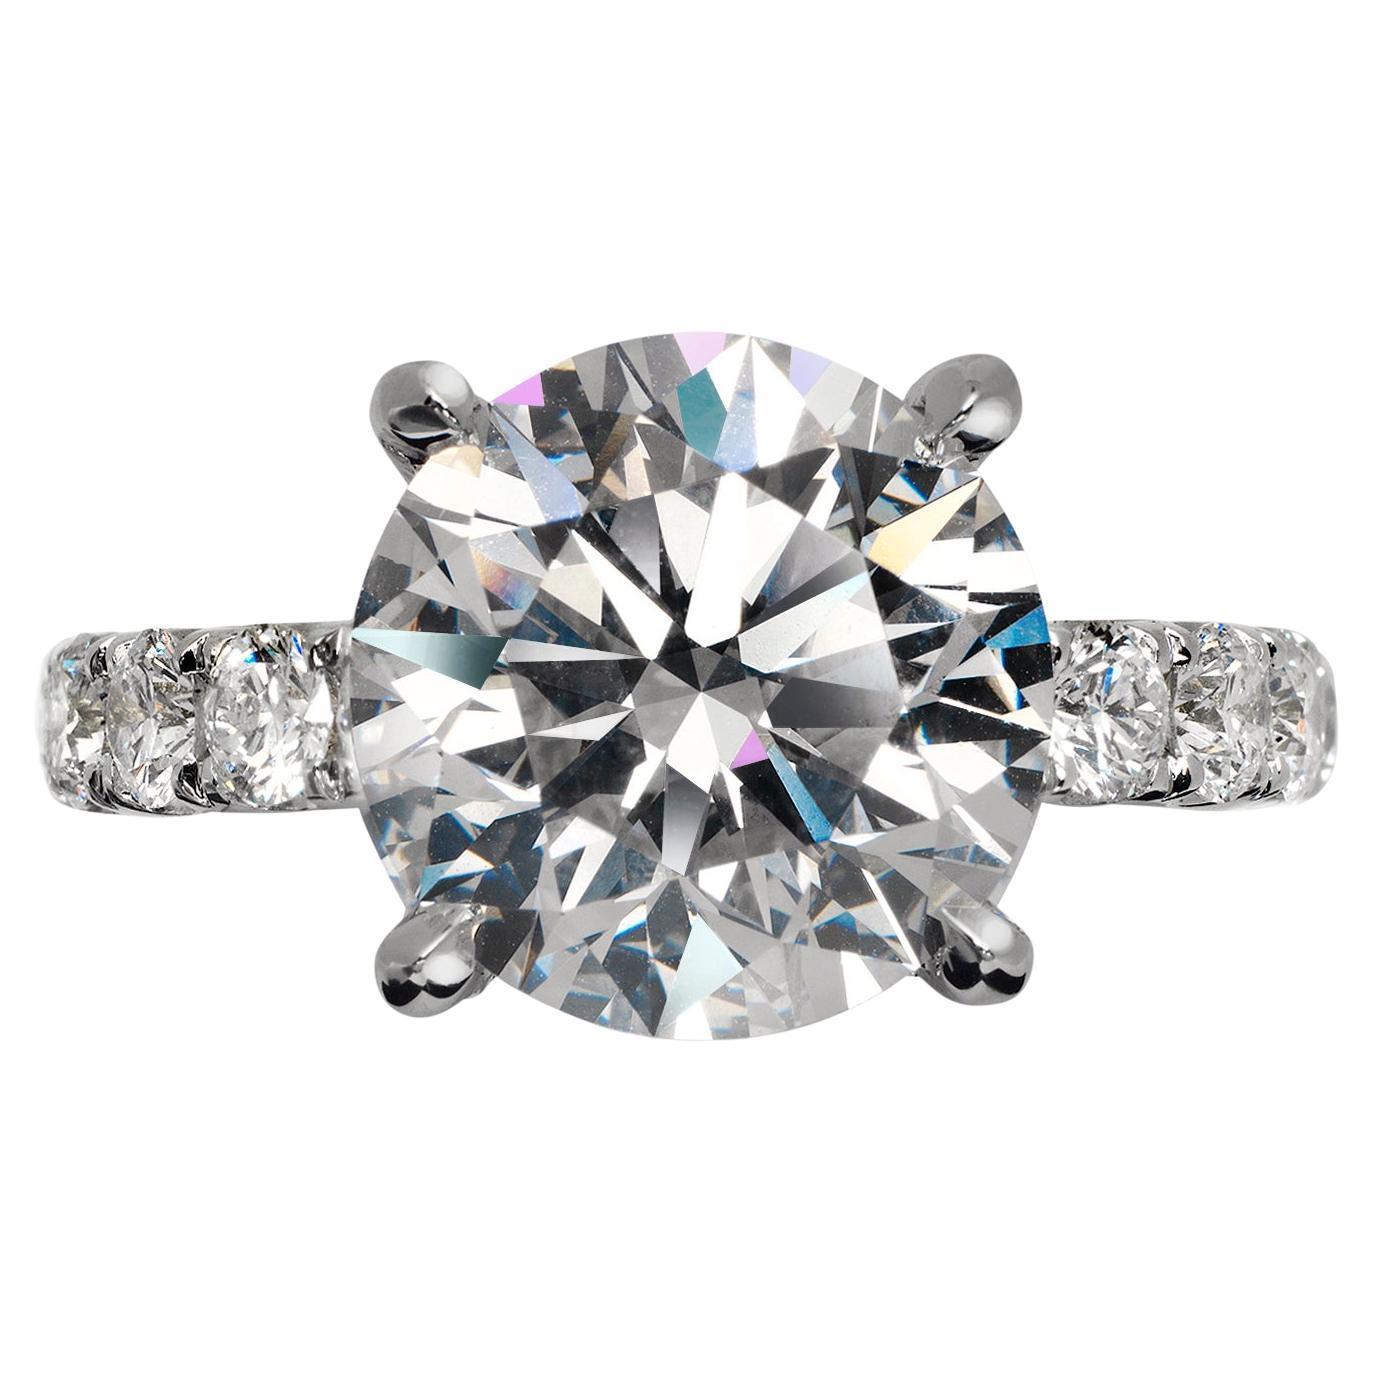 8 Carat Round Diamond Engagement Ring GIA Certified E SI1